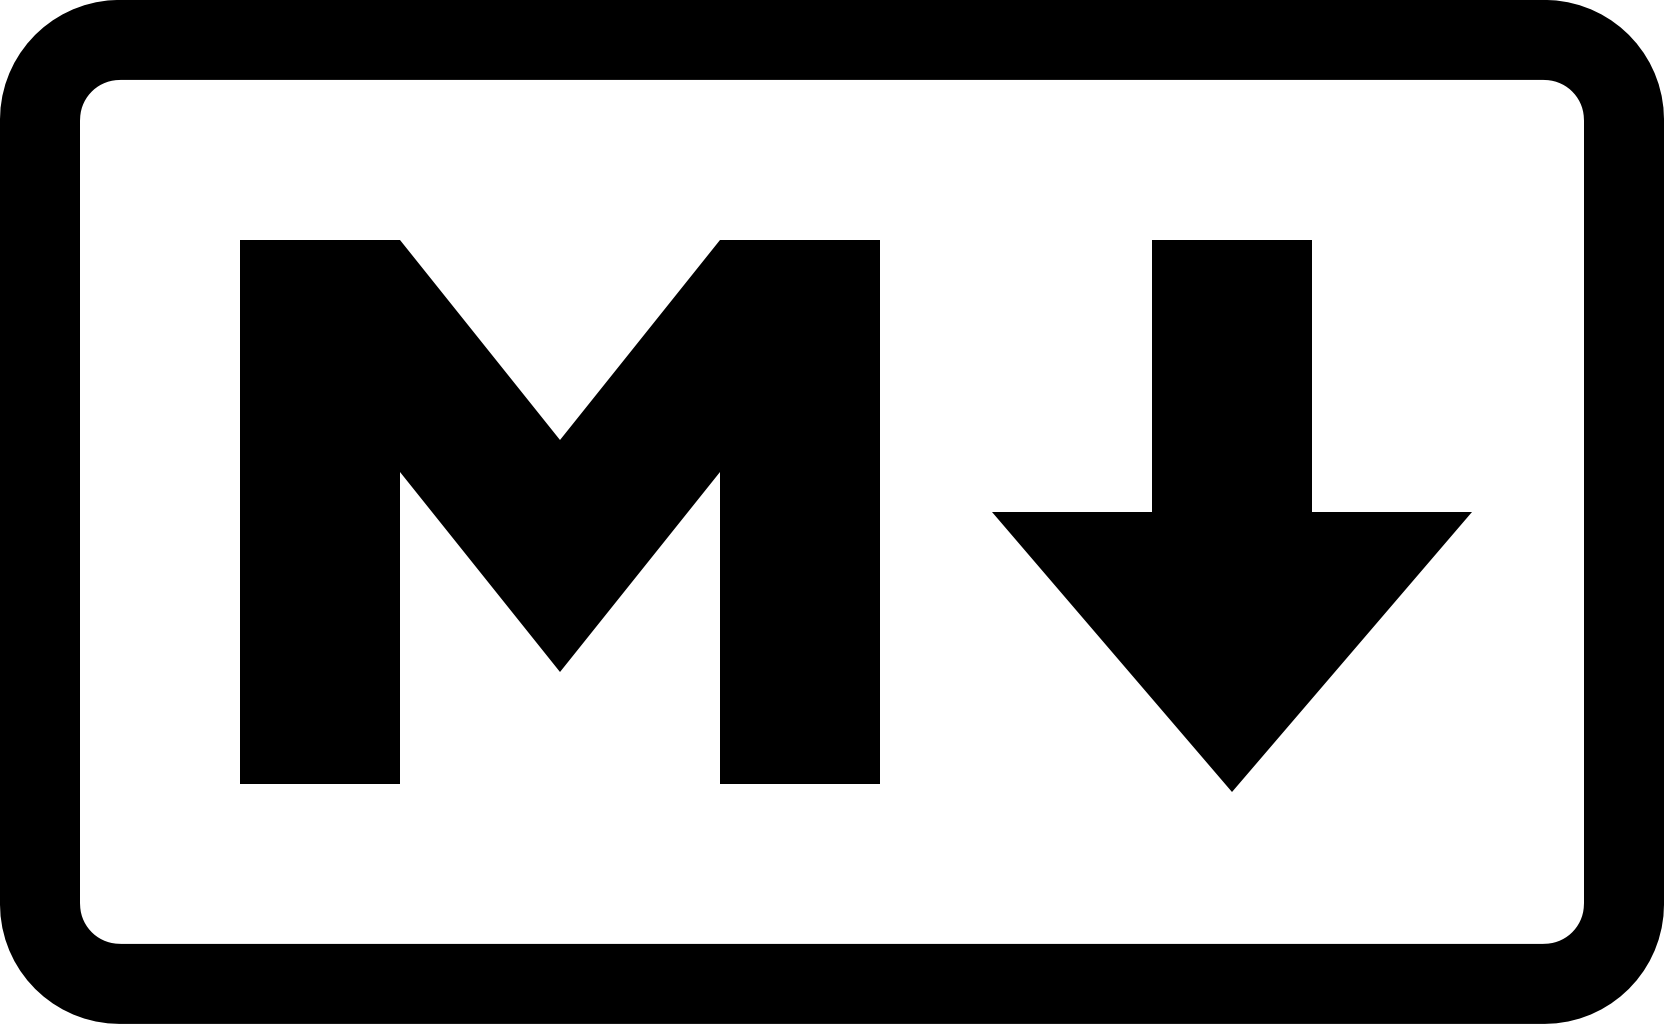 Unofficial Markdown logo.